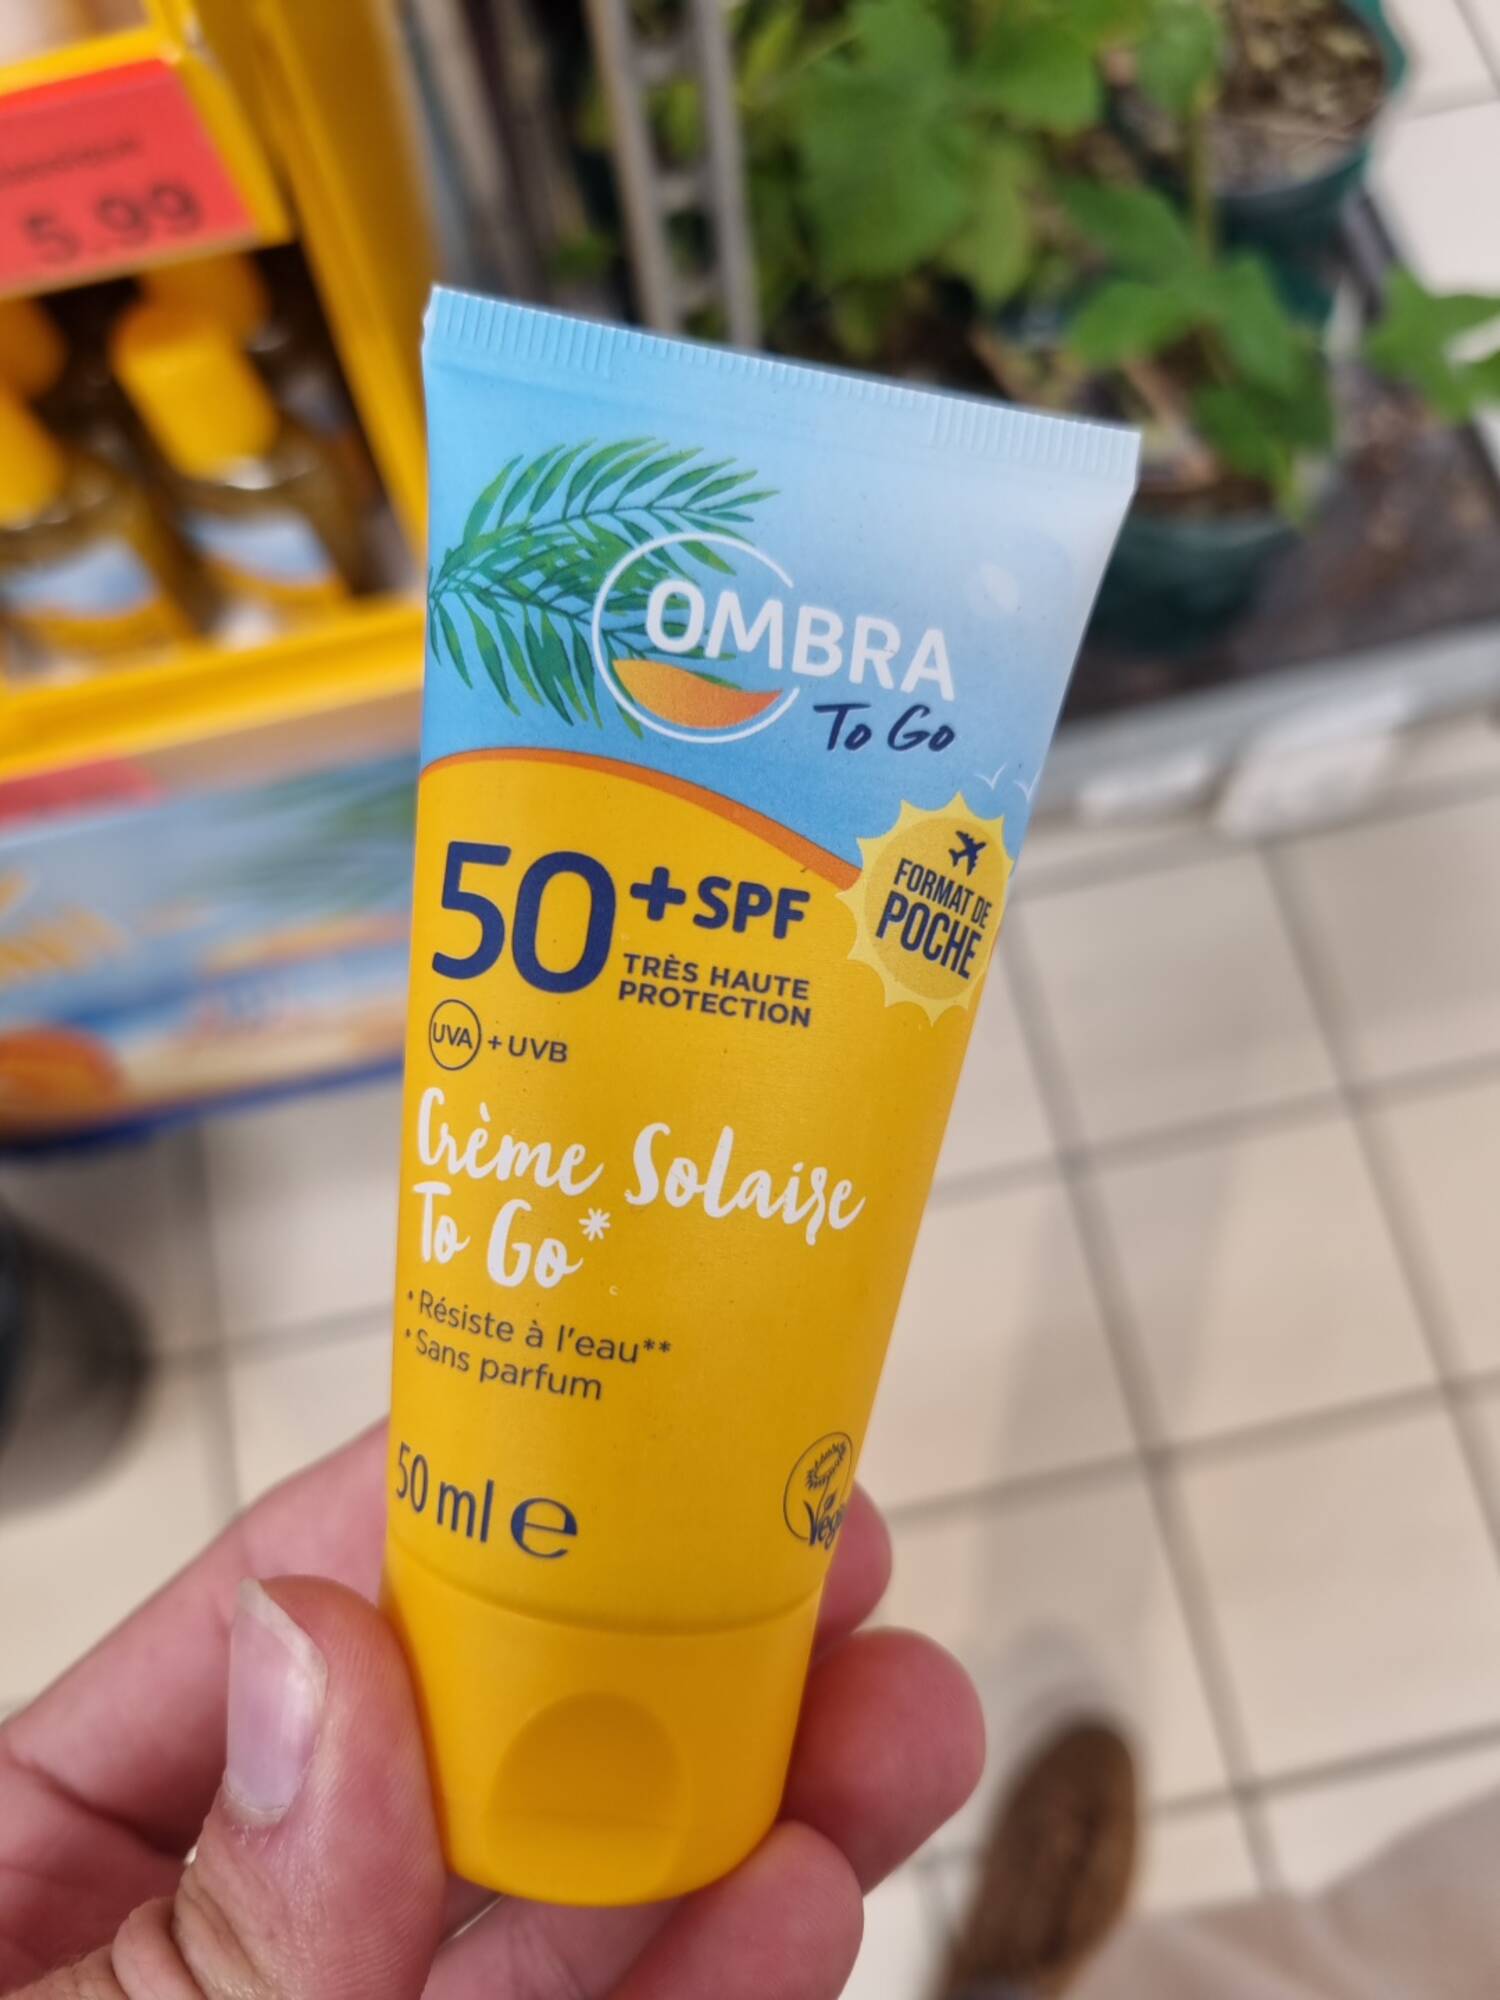 OMBRA - Crème solaire to go SPF 50+